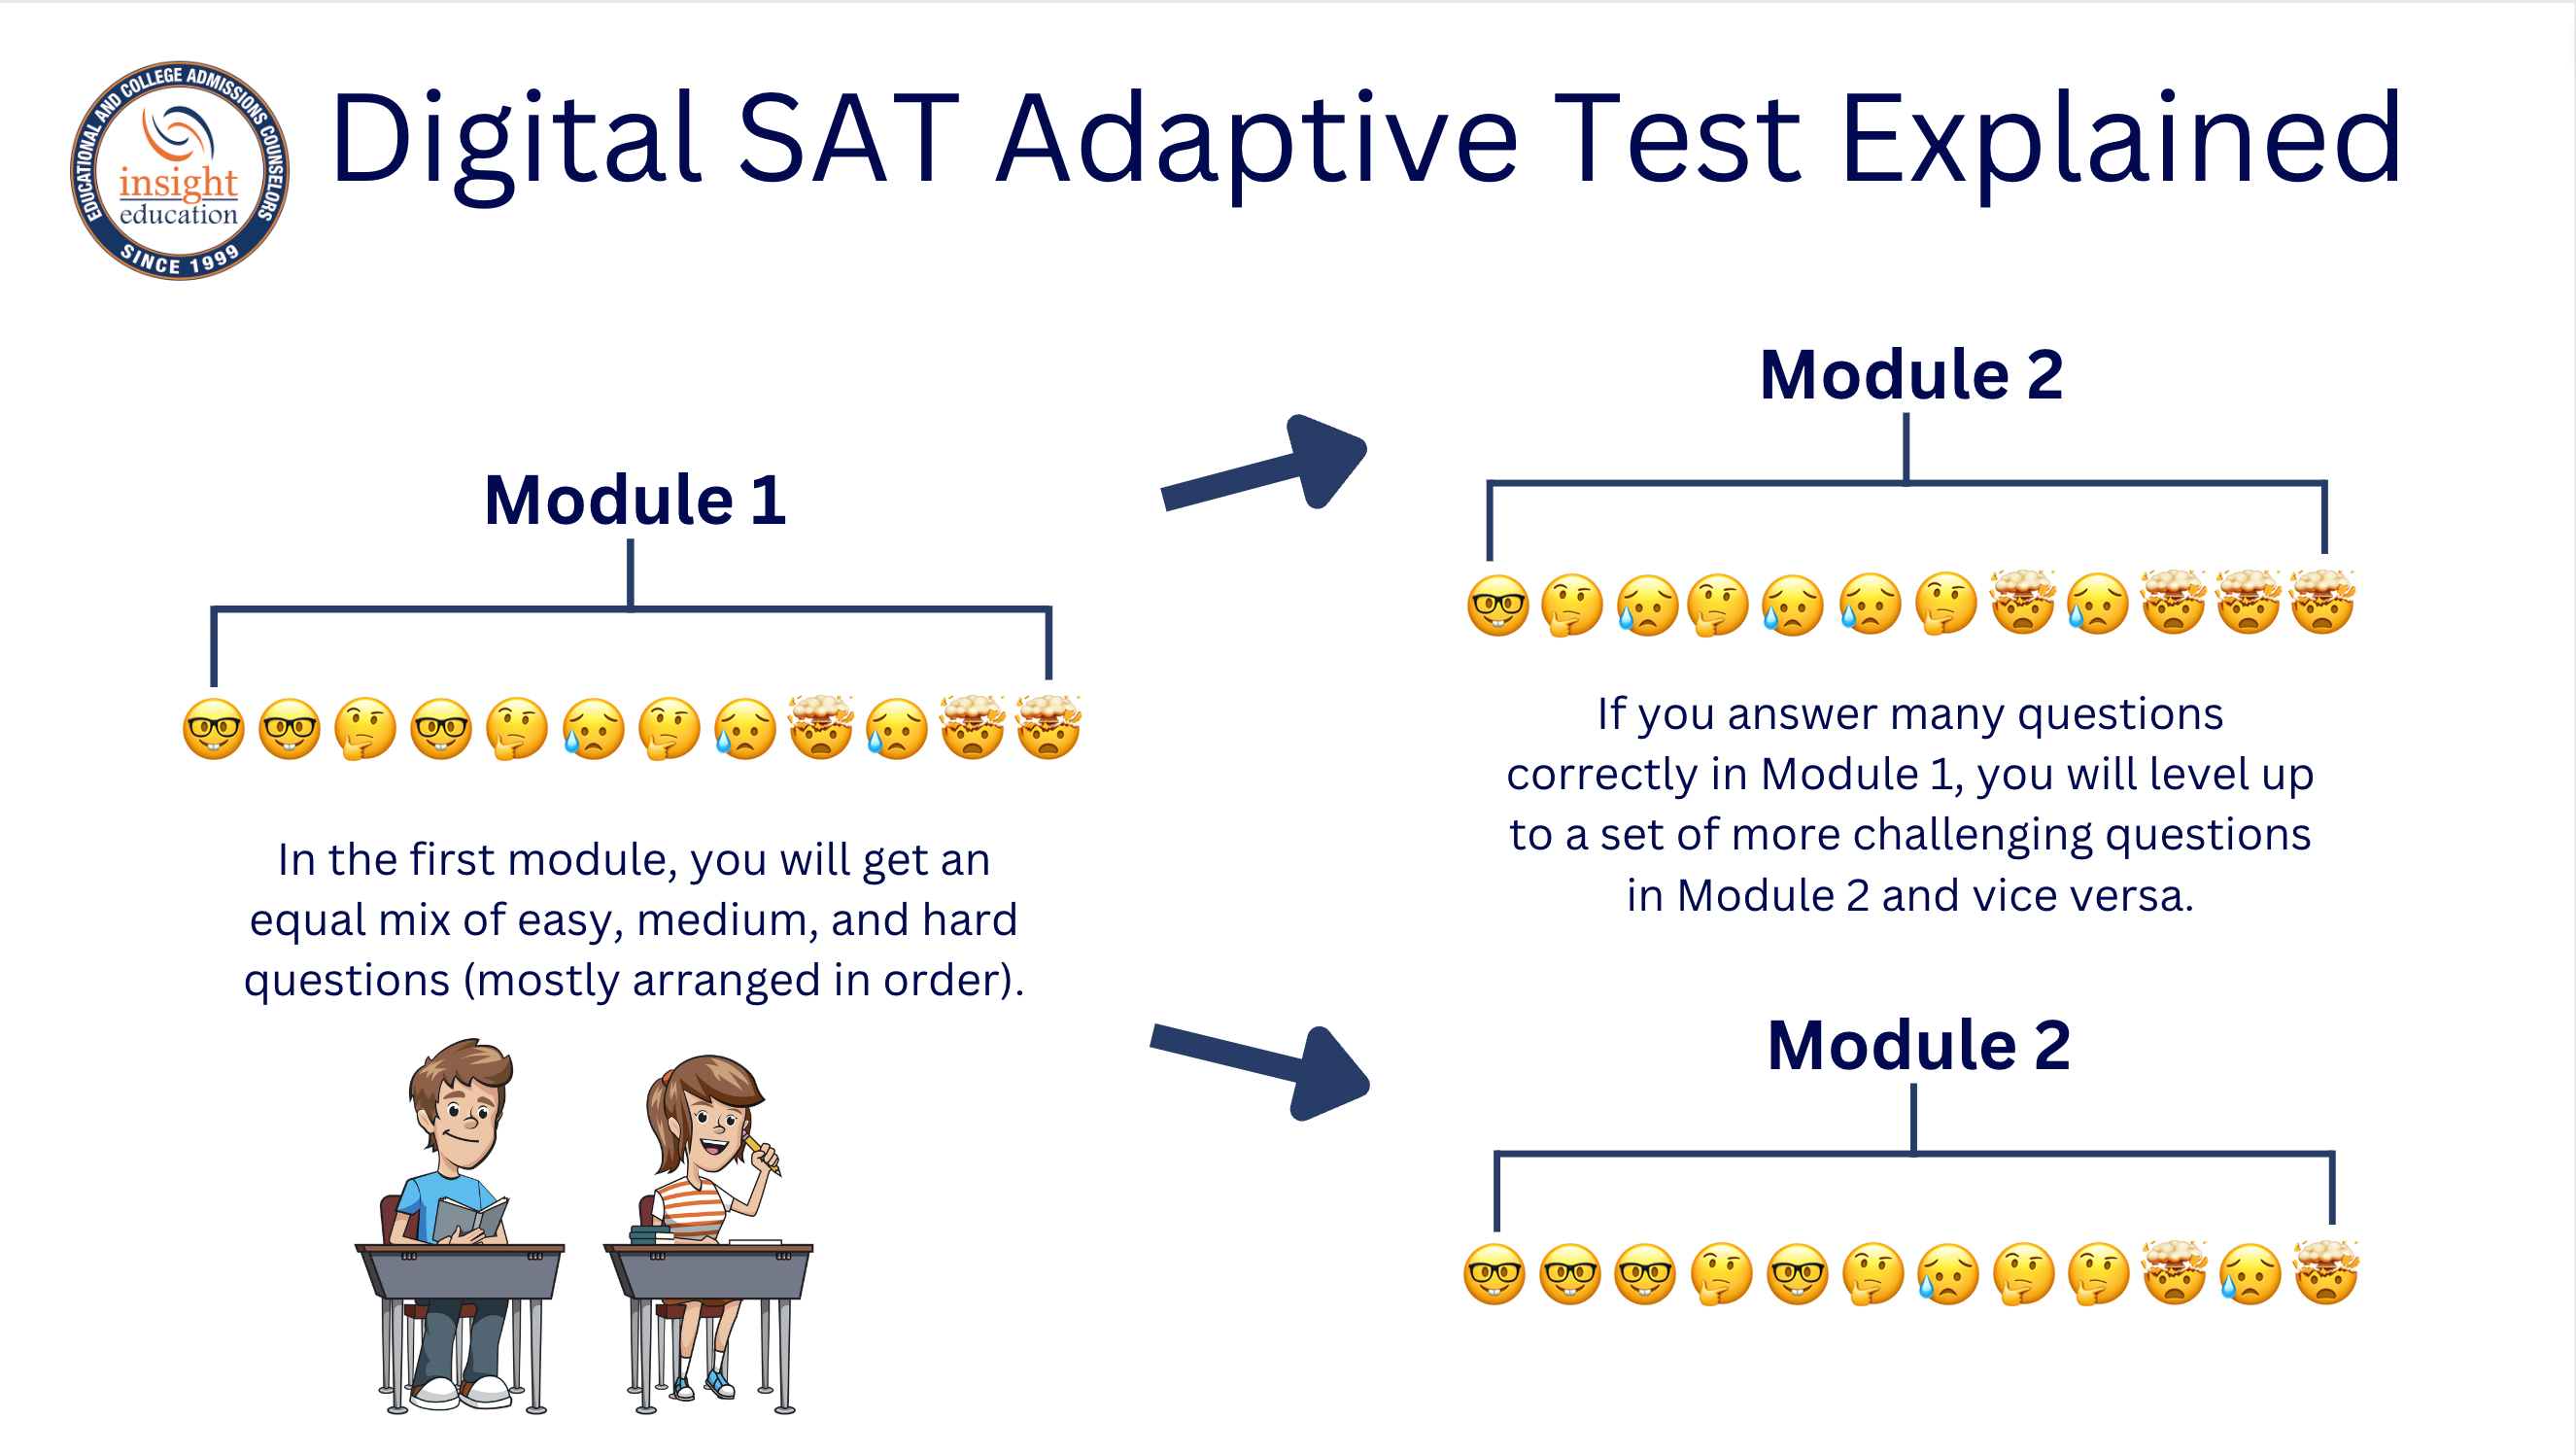 Insights into new digital SAT adaptive test module